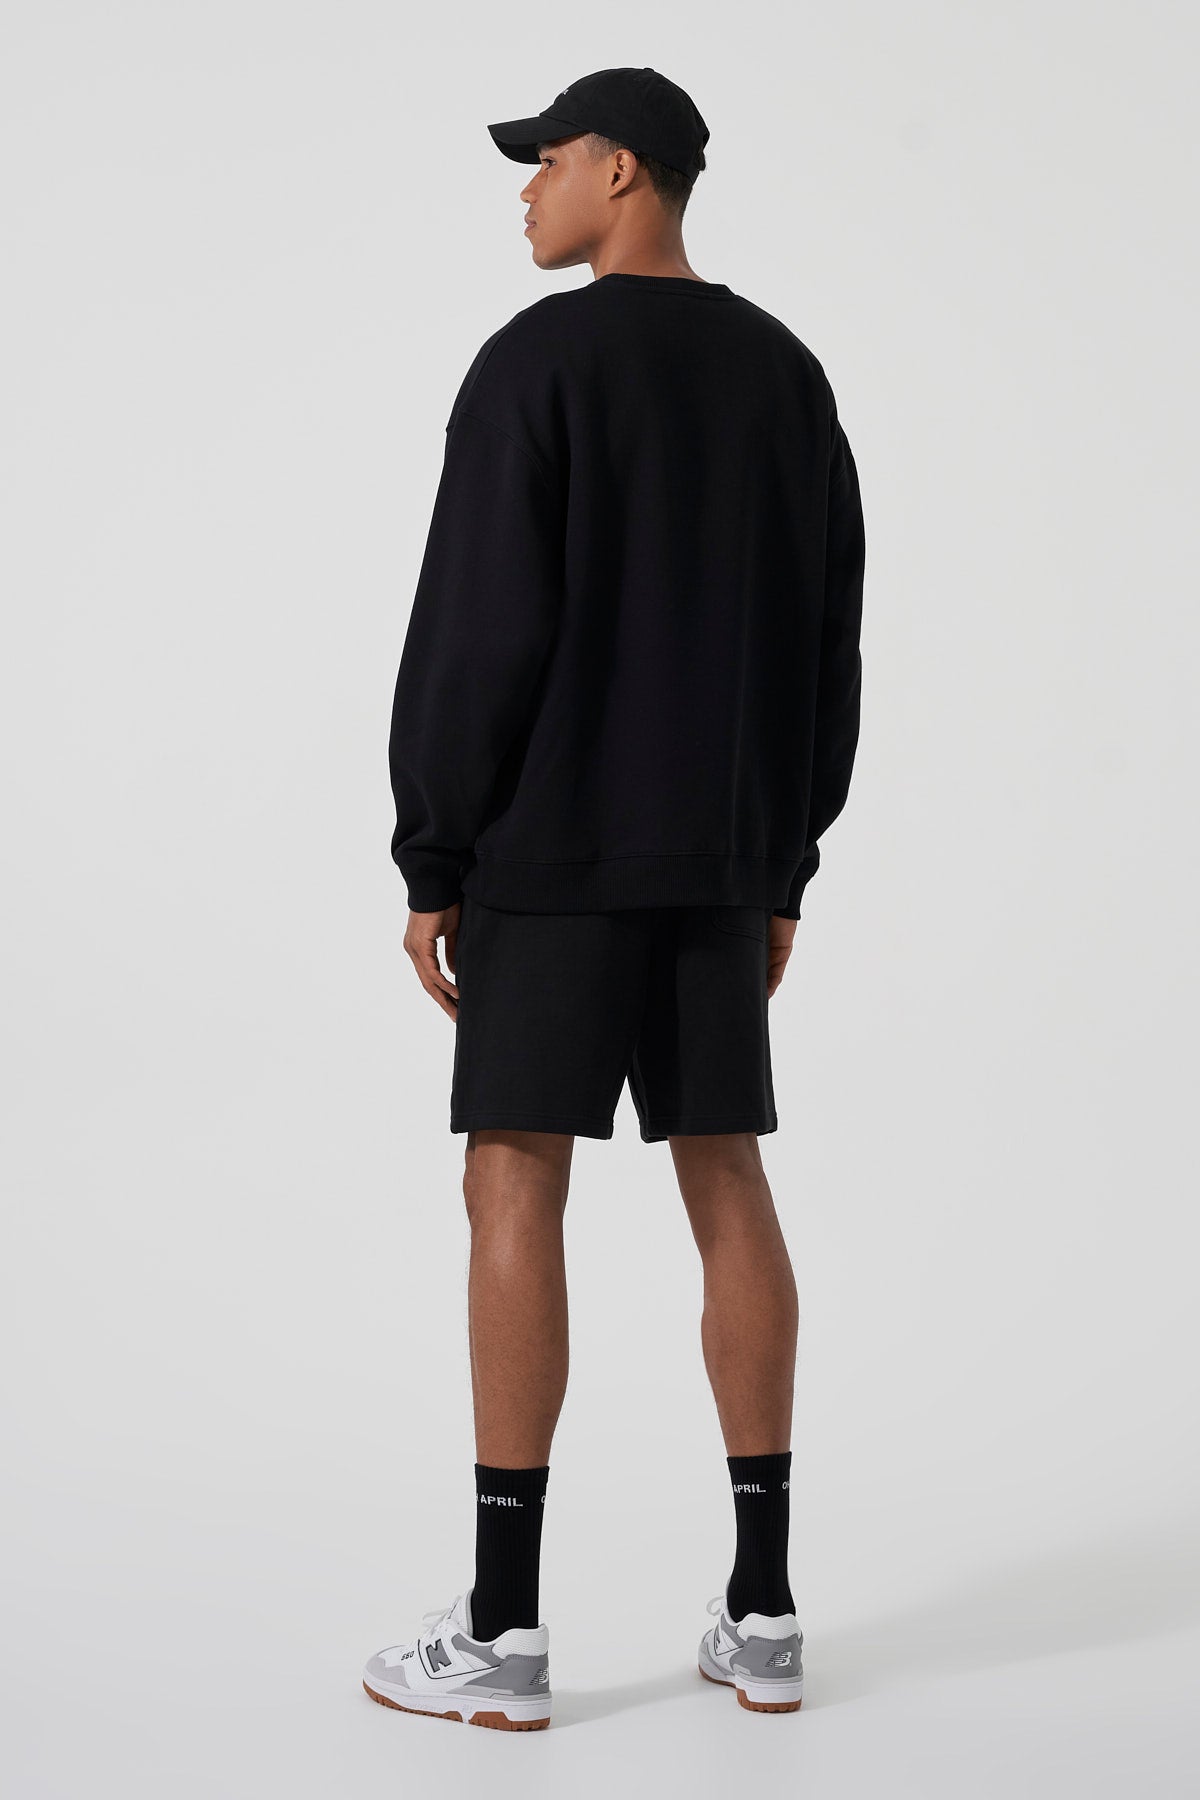 Oversized Sweater Black